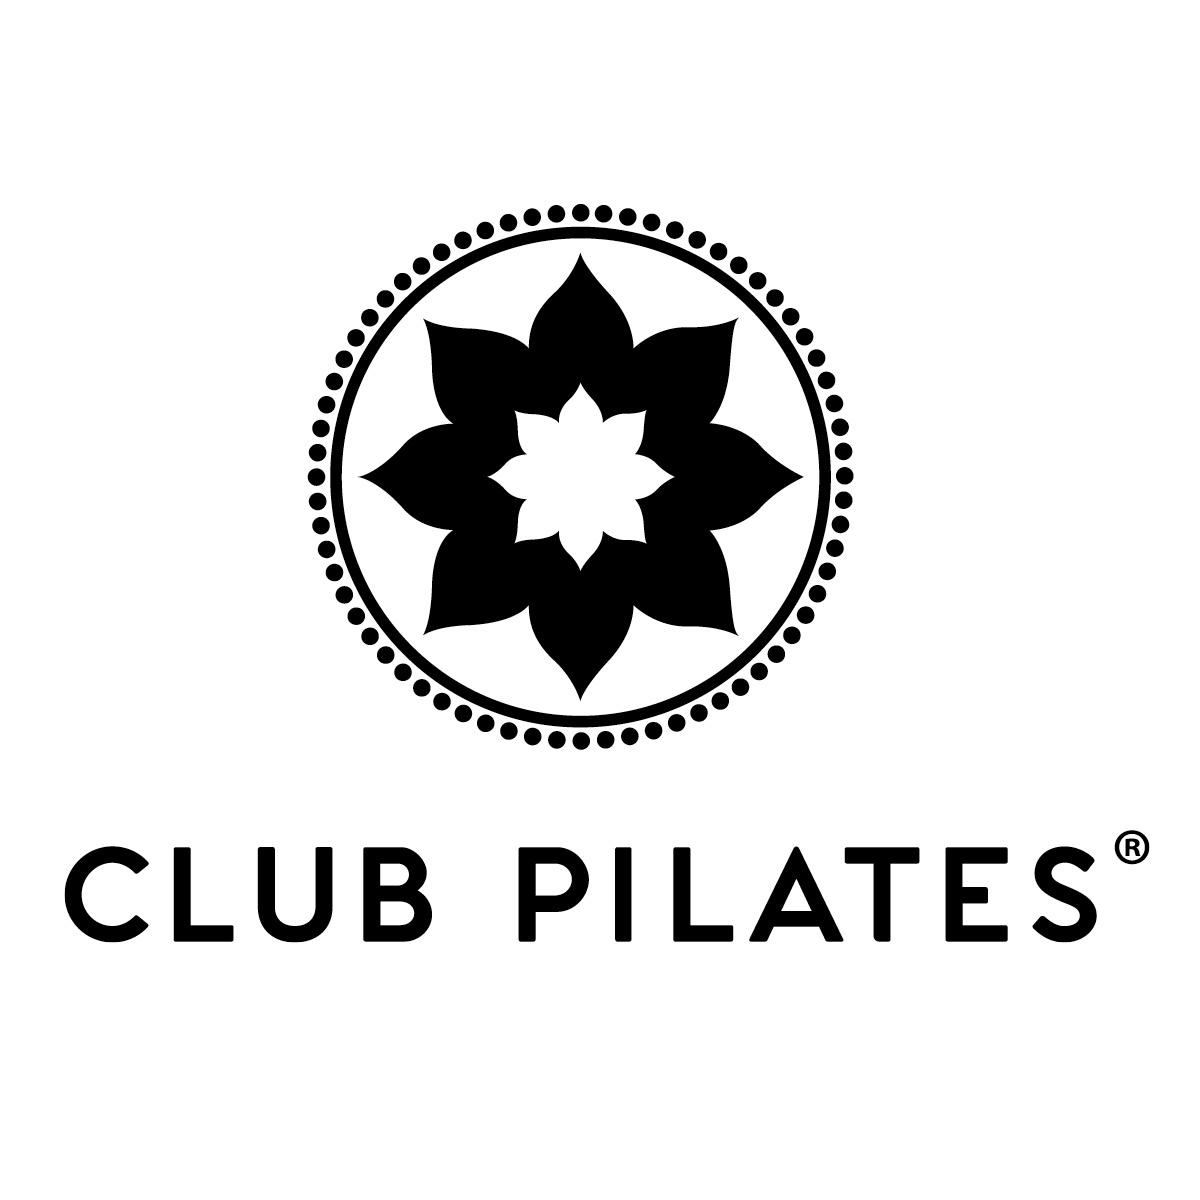 Club Pilates 1051 Main St, River Edge New Jersey 07661